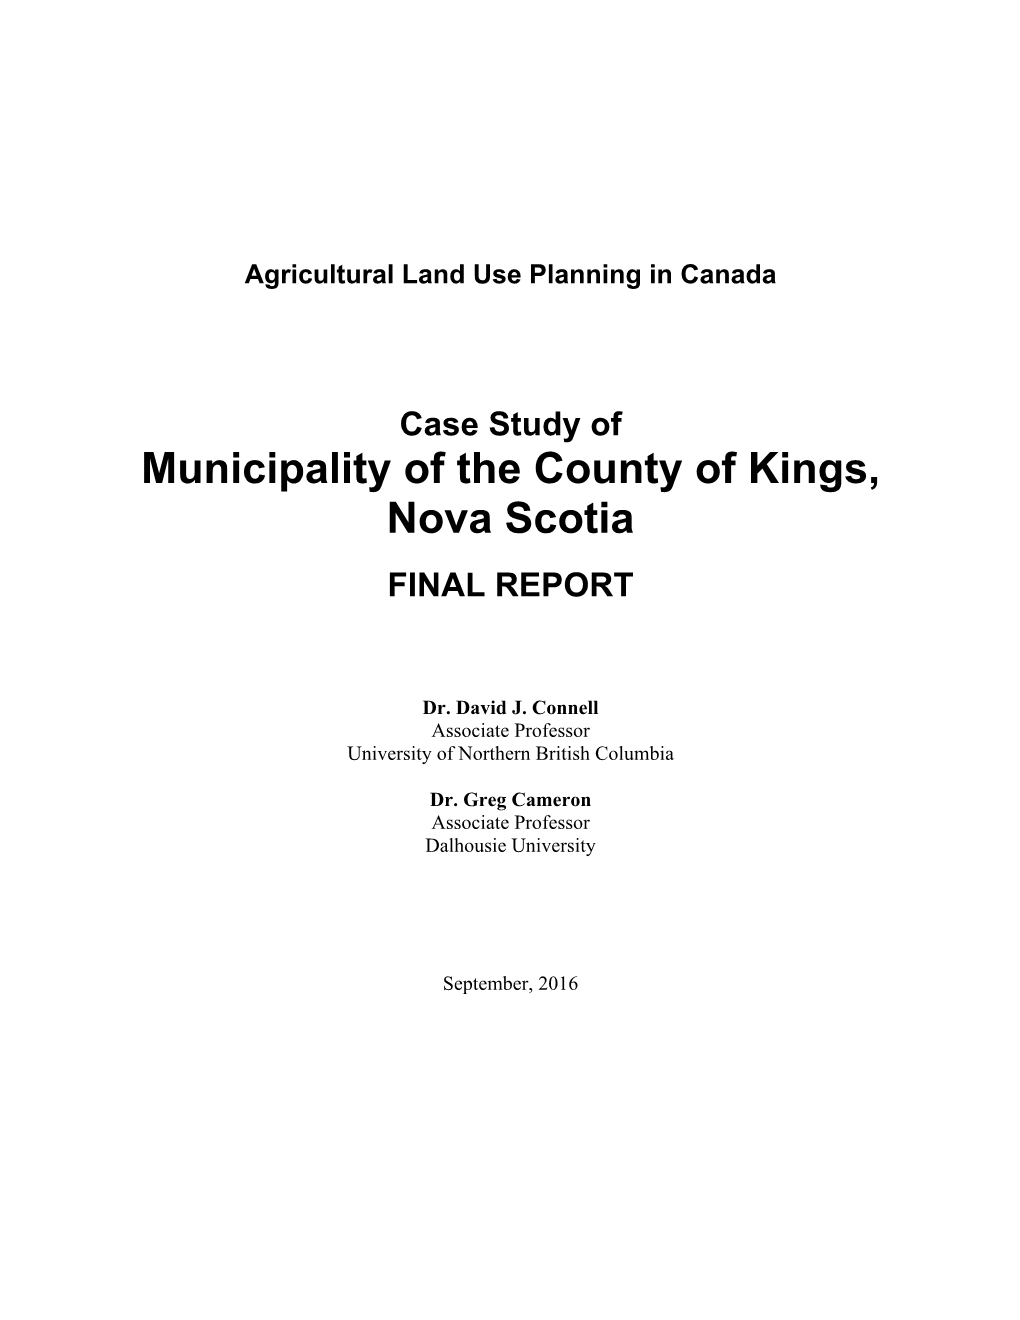 Municipality of the County of Kings, Nova Scotia